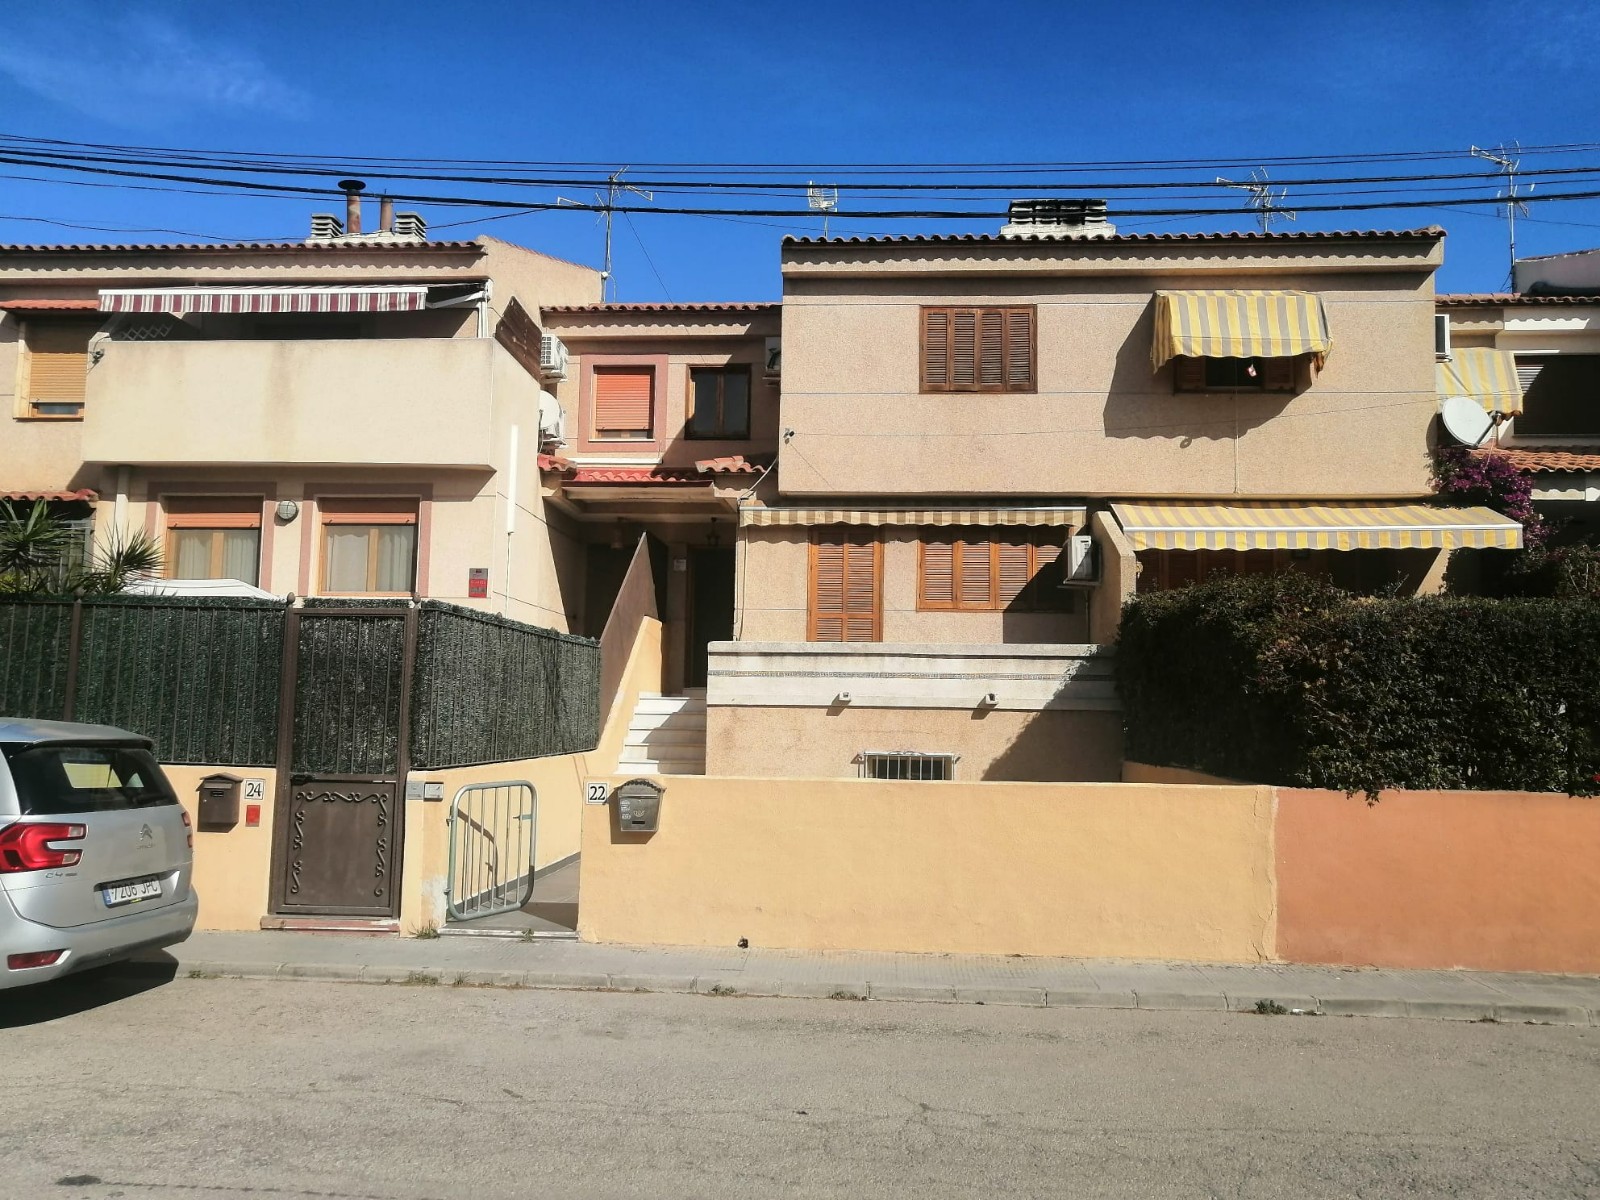 For sale: 4 bedroom house / villa in Almoradí